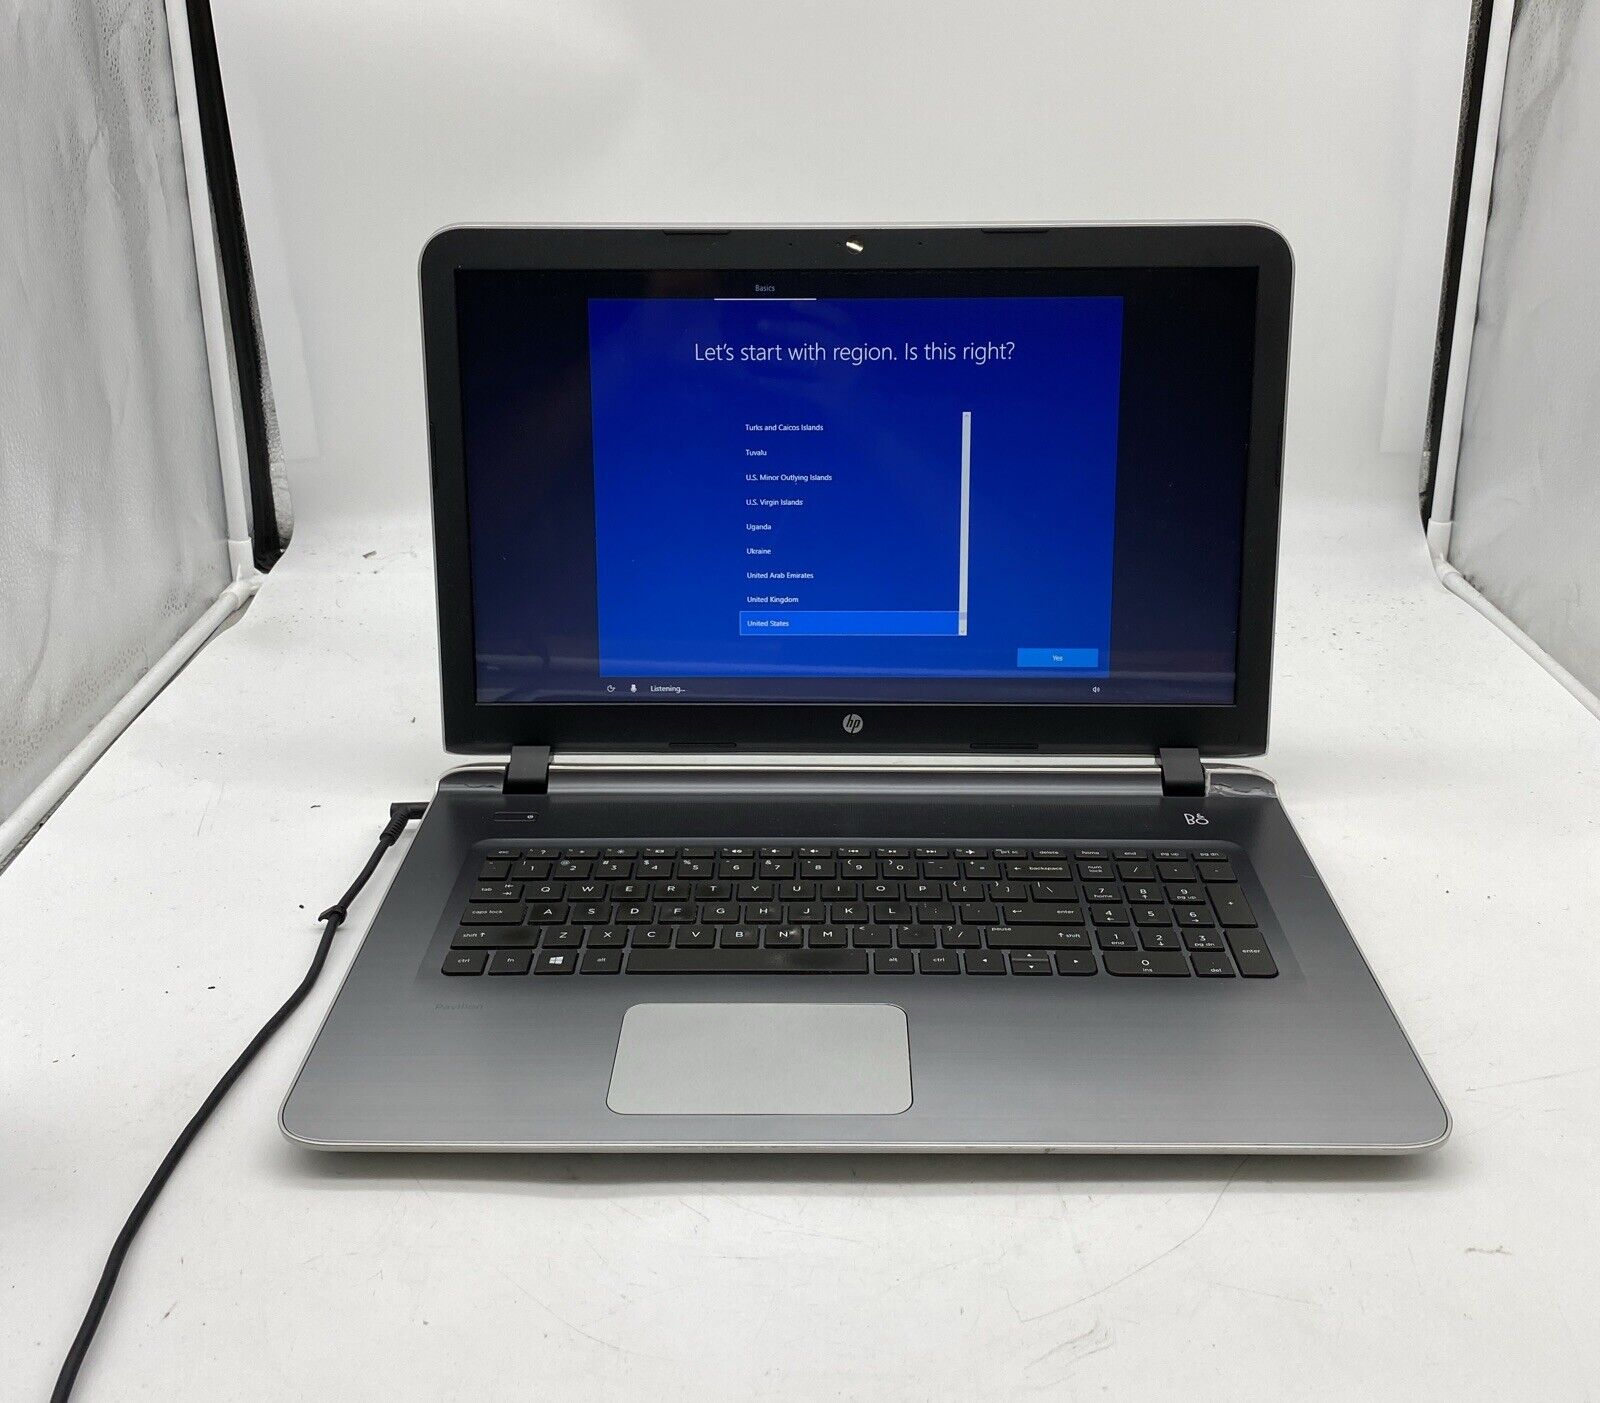 HP Pavilion 17-g119dx Laptop Intel Core i5-4210U 1.7GHz 4GB RAM 1TB HDD W10P